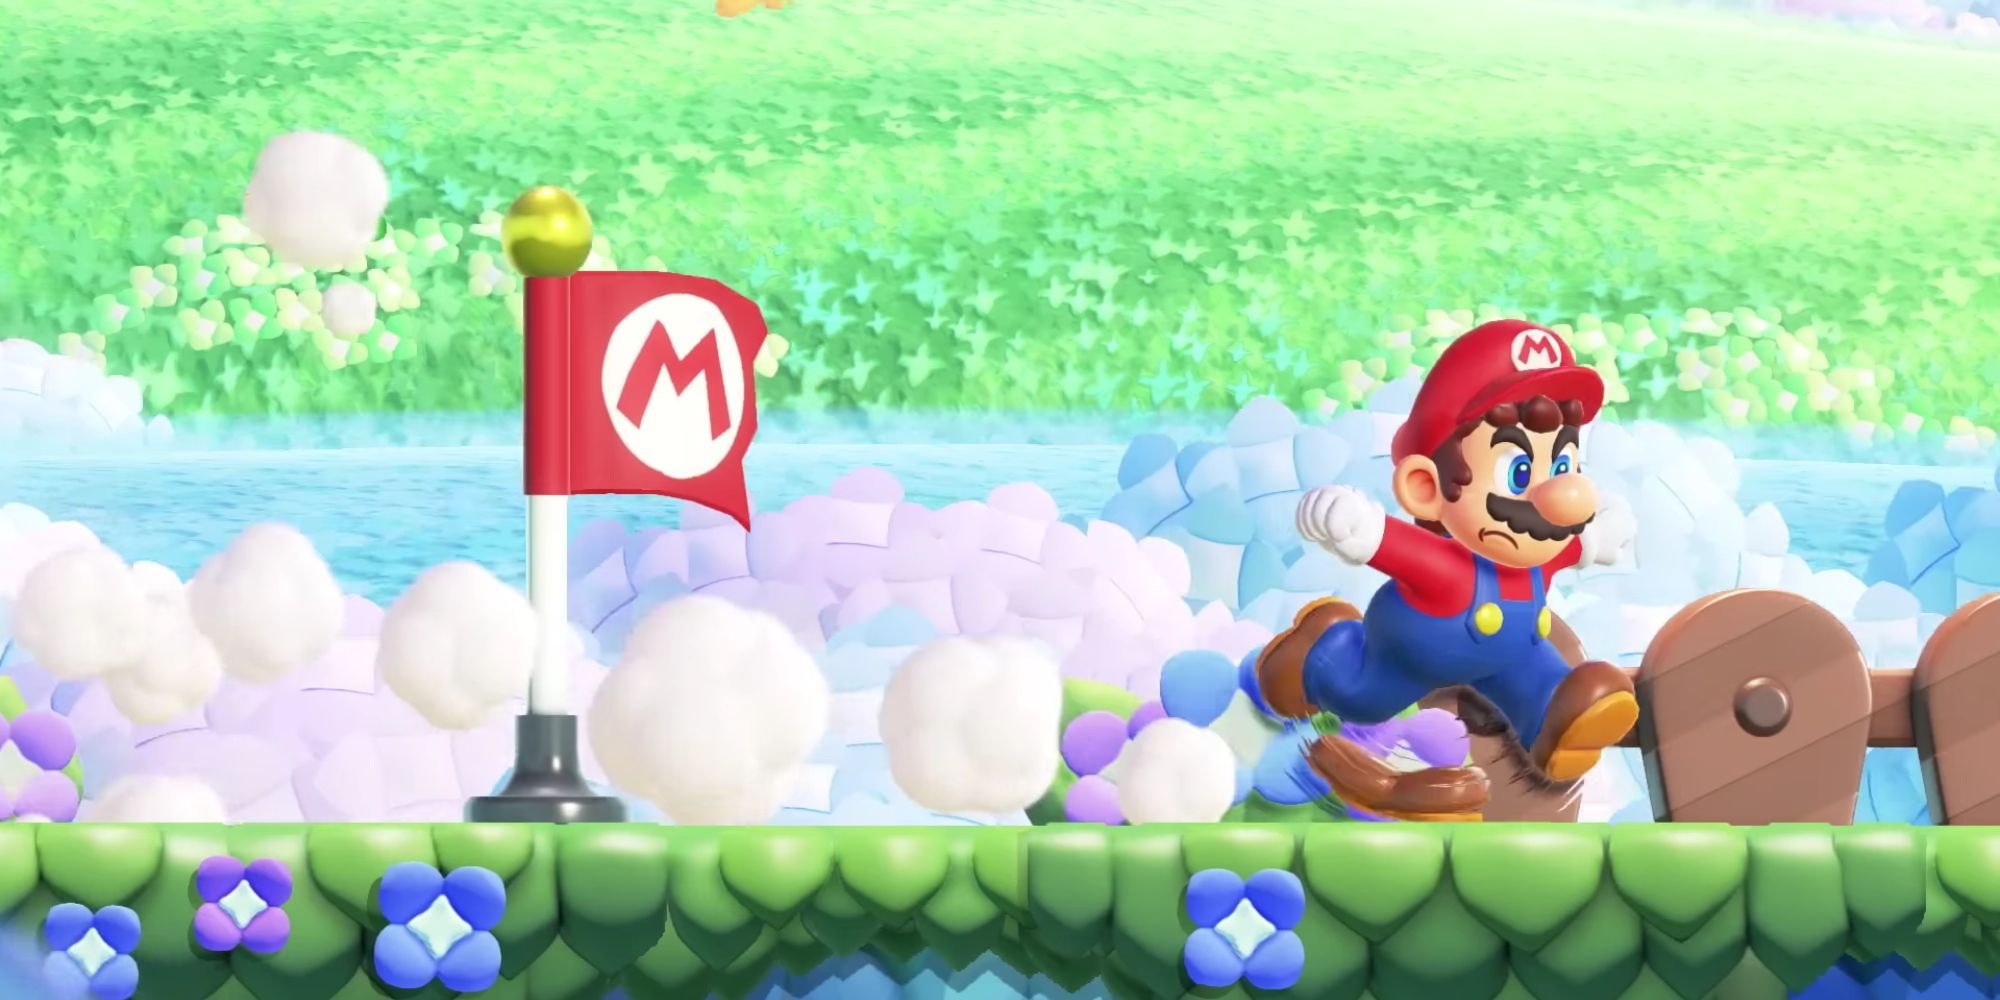 Mario running past the checkpoint flag in Super Mario Bros. Wonder.